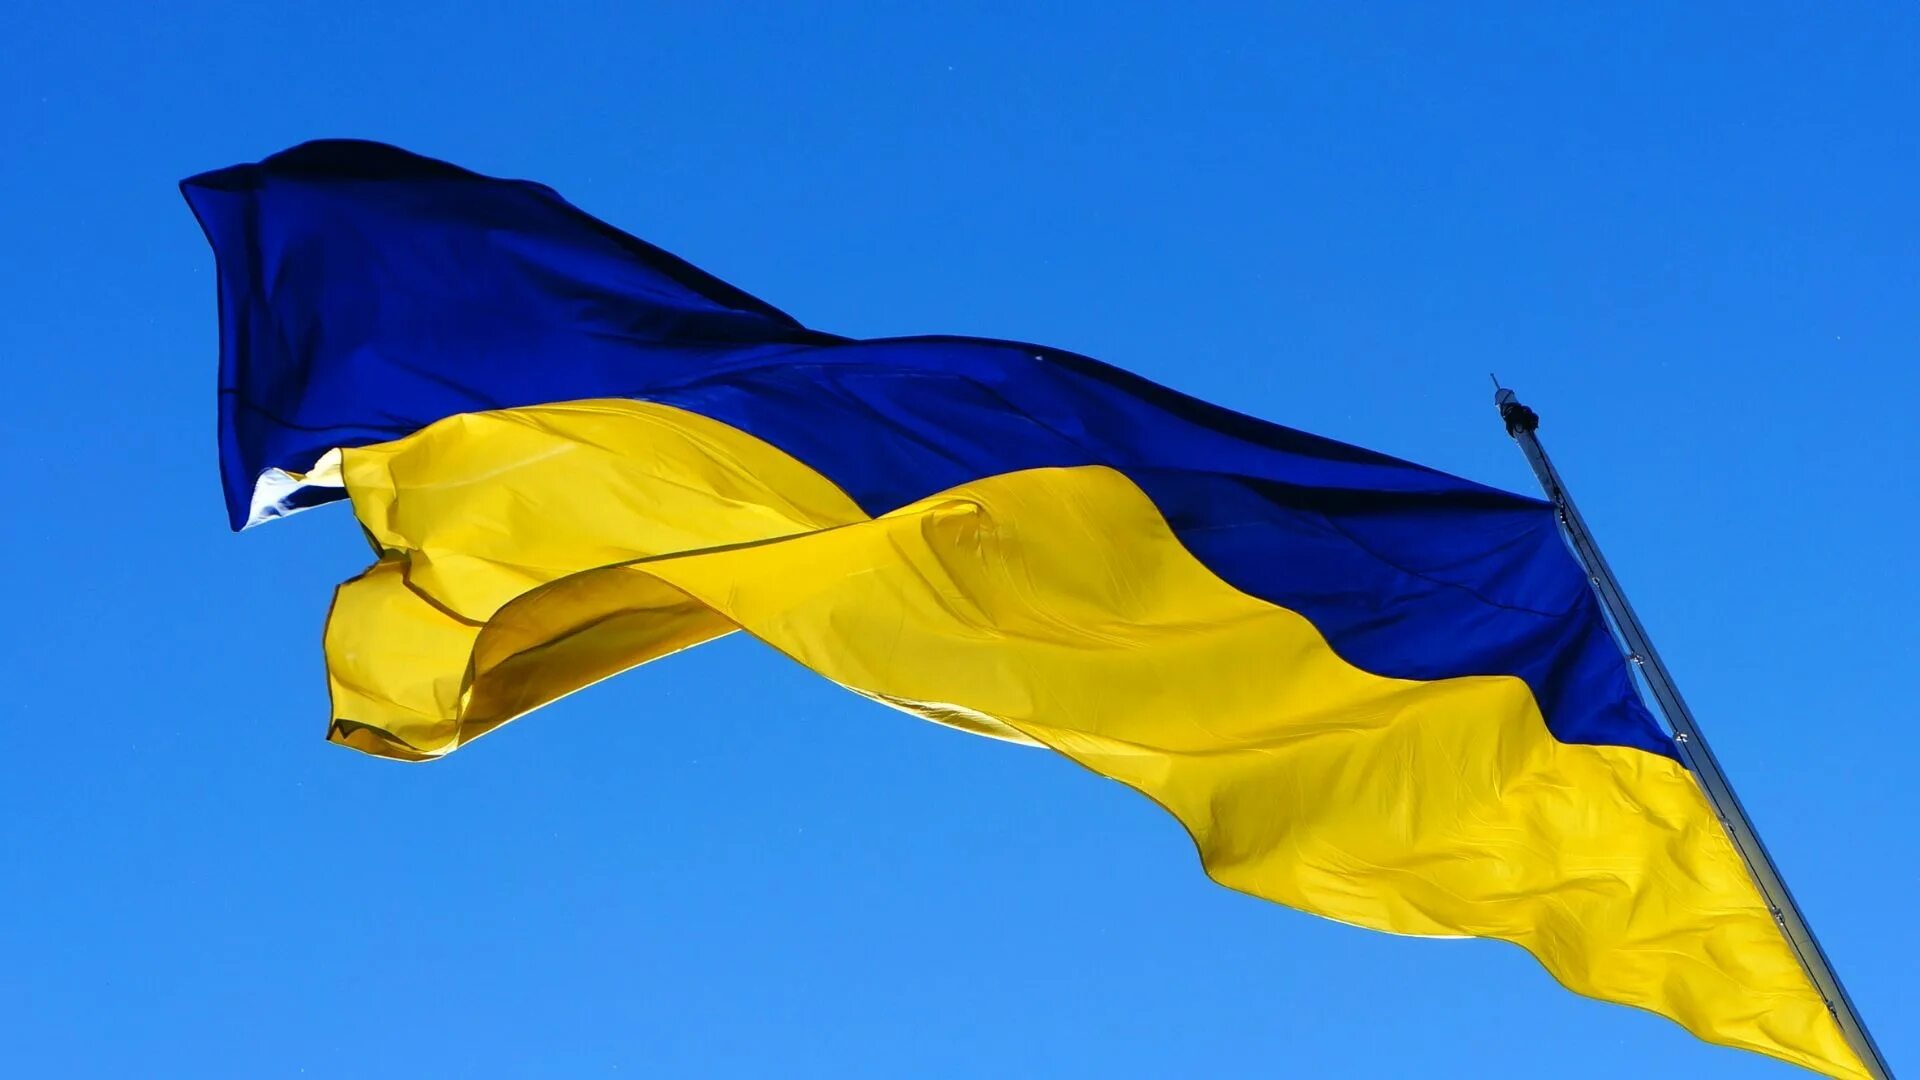 Флаг Украины жовто блакитный. Украинский флаг желто блакитный. Флаг Украины желто синий. Голубо желтый флаг Украины 1991.